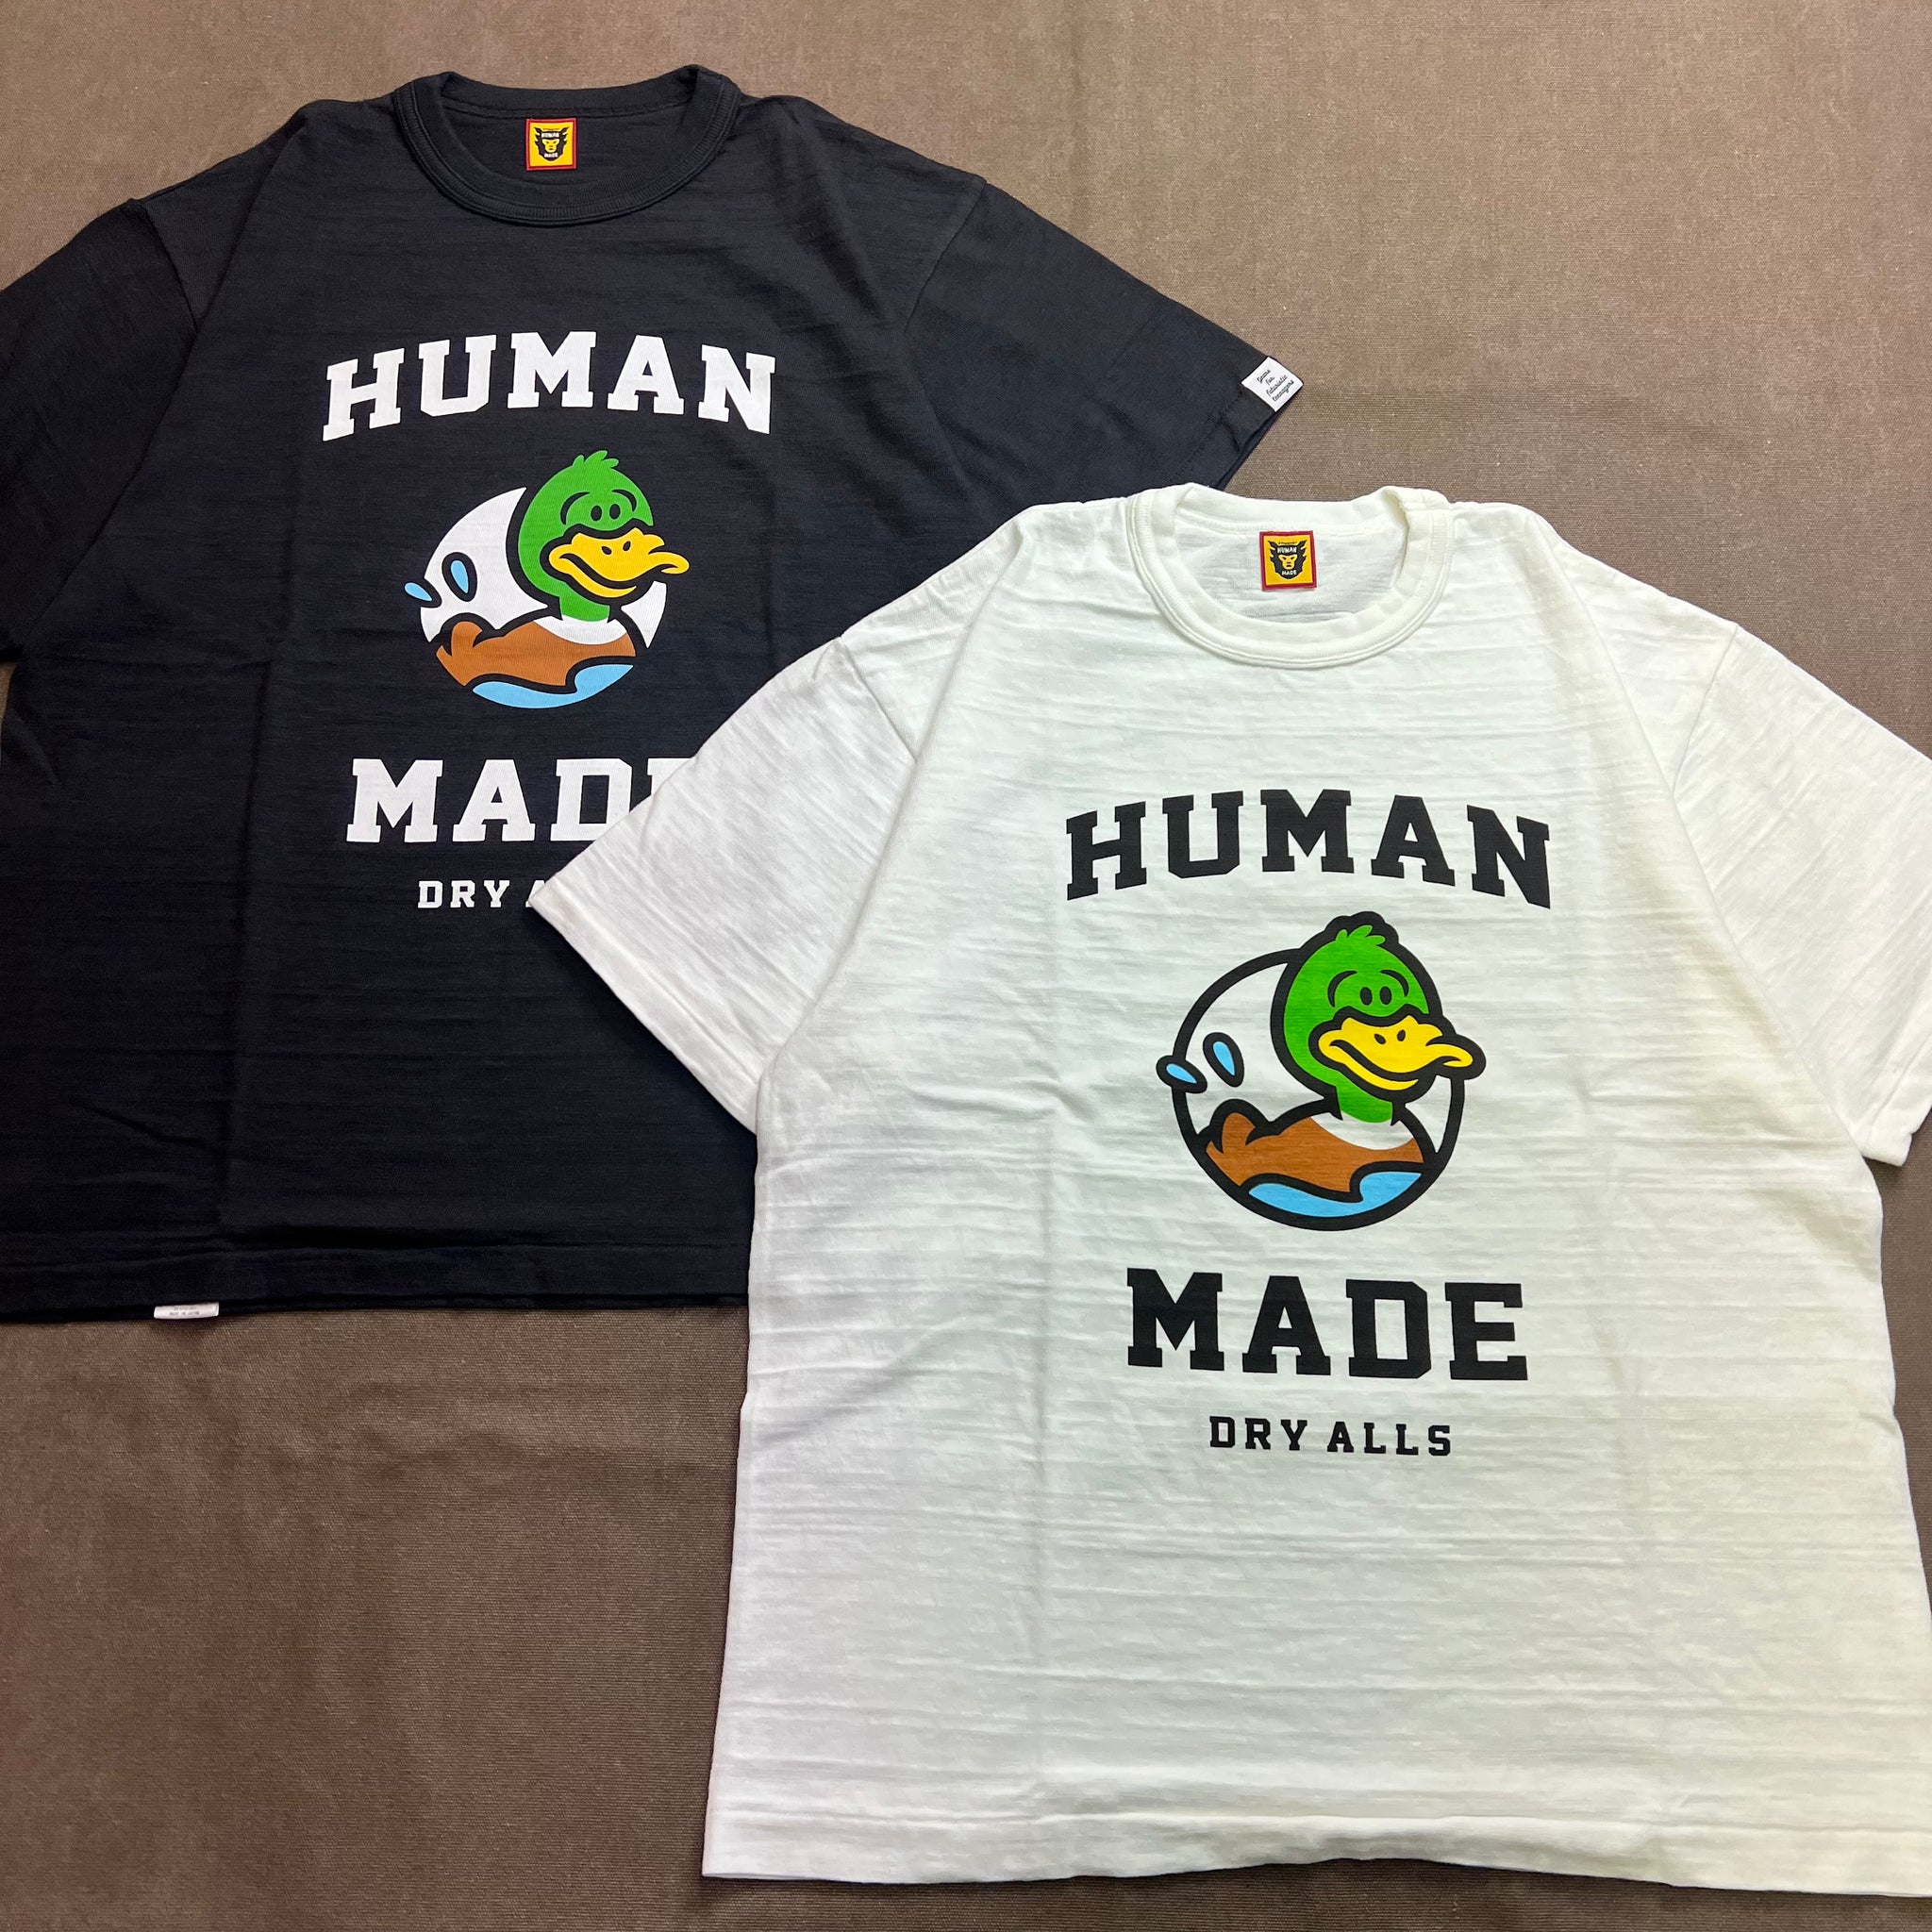 Human Made Dry Alls 2313 T-Shirt White for Men